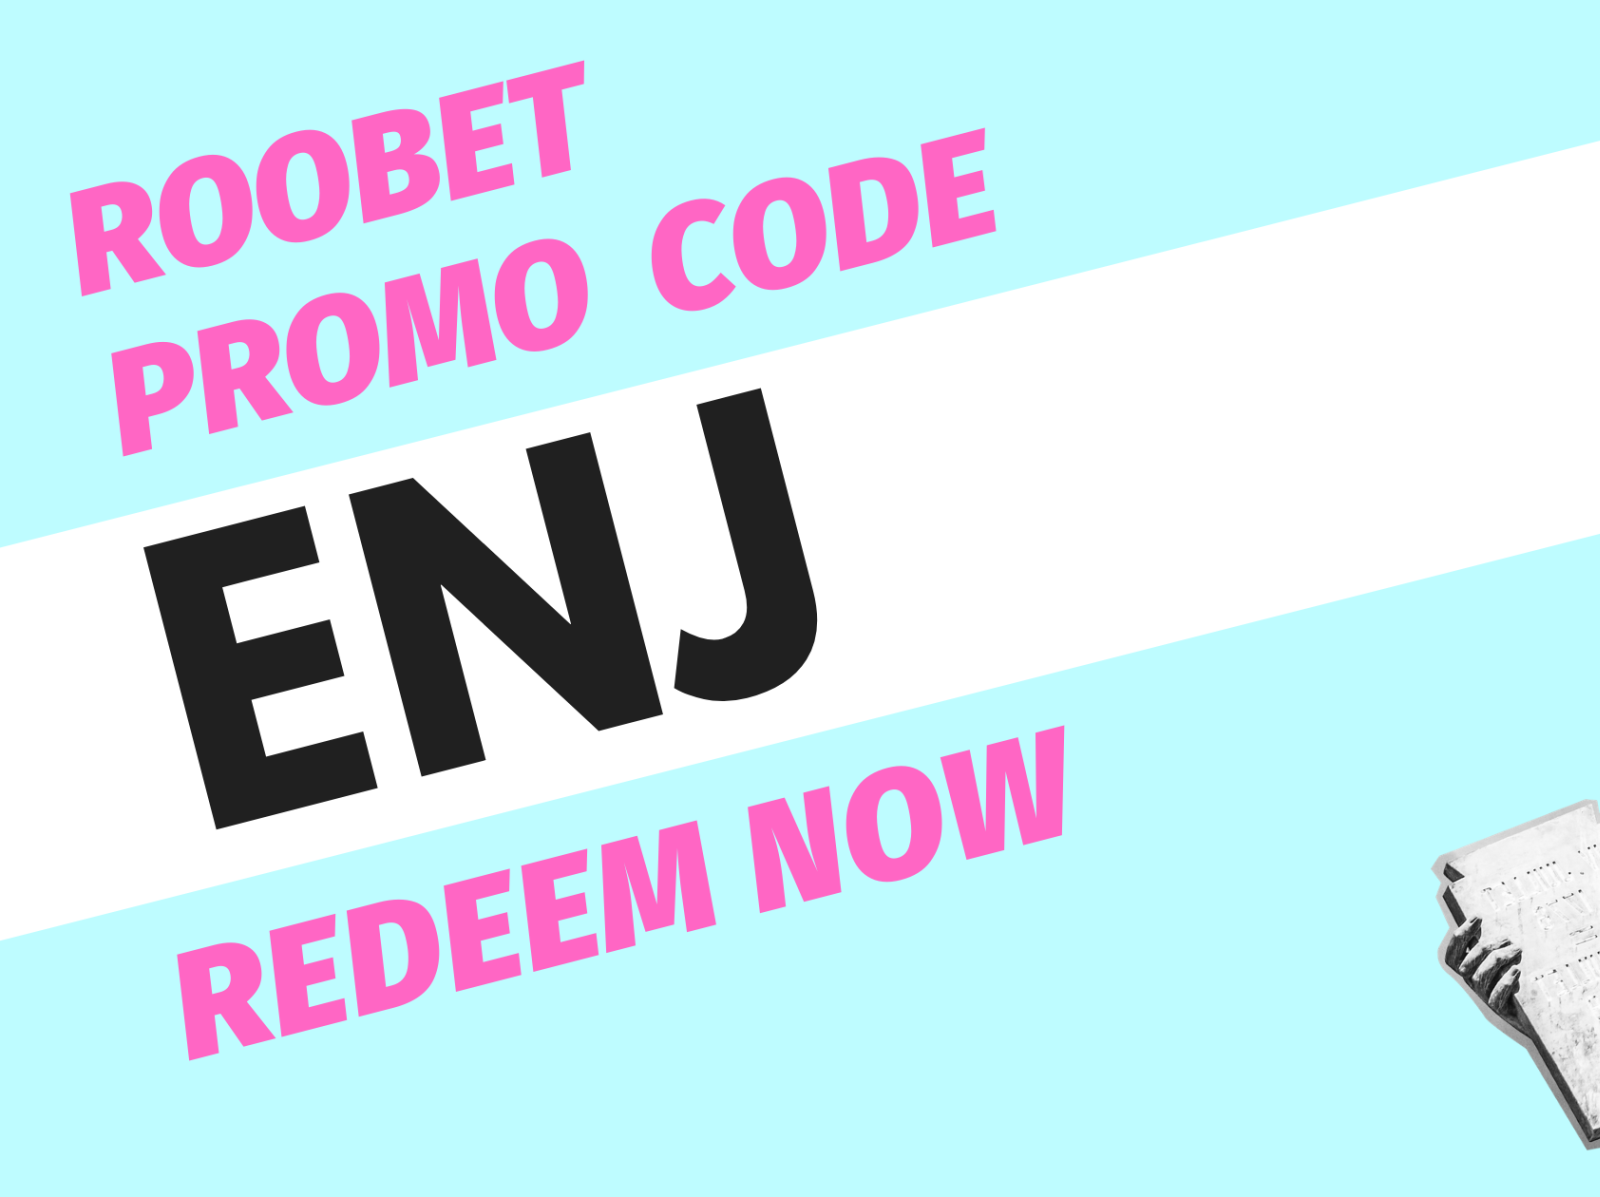 Roobet Promo Code: Get 100% Bonus on First Deposit - wide 11